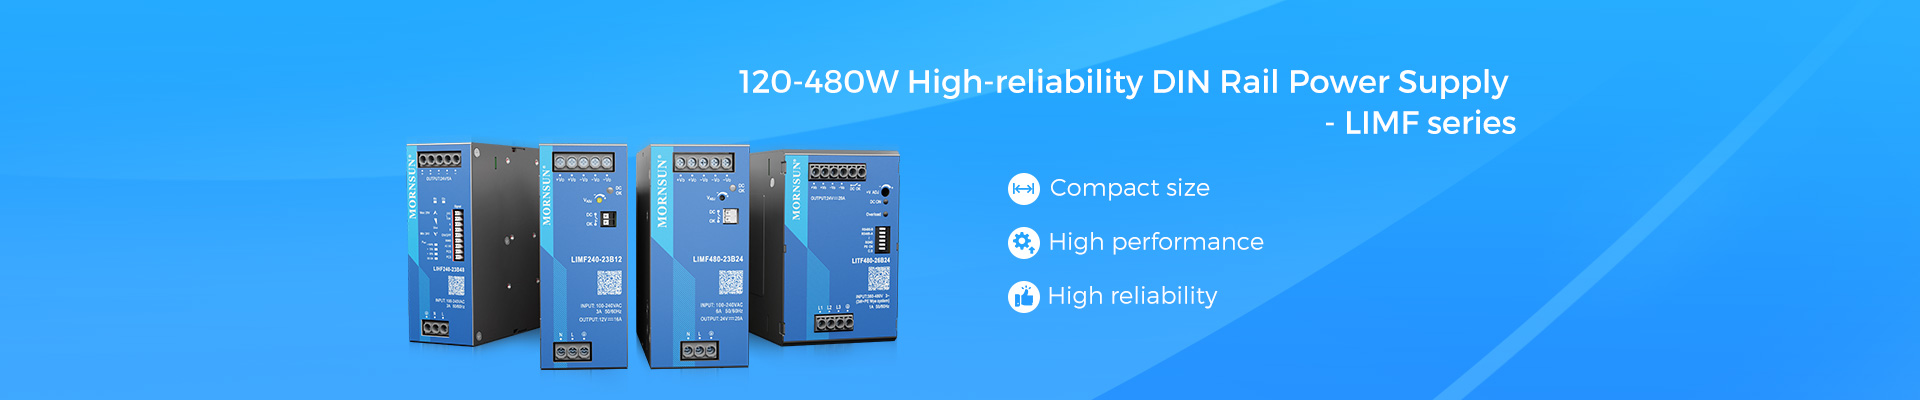 120-480W High-reliability DIN Rail Power Supply——LIMF series